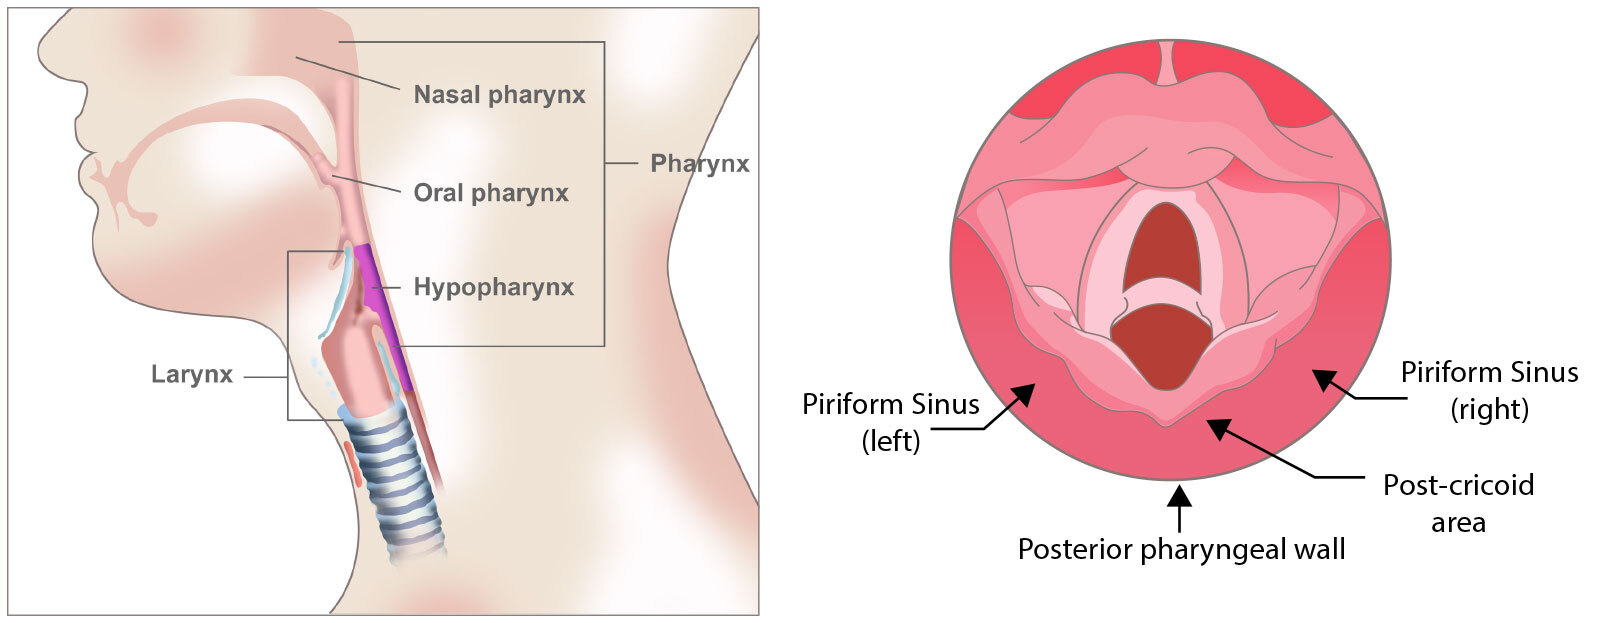 pyriform sinus cancer